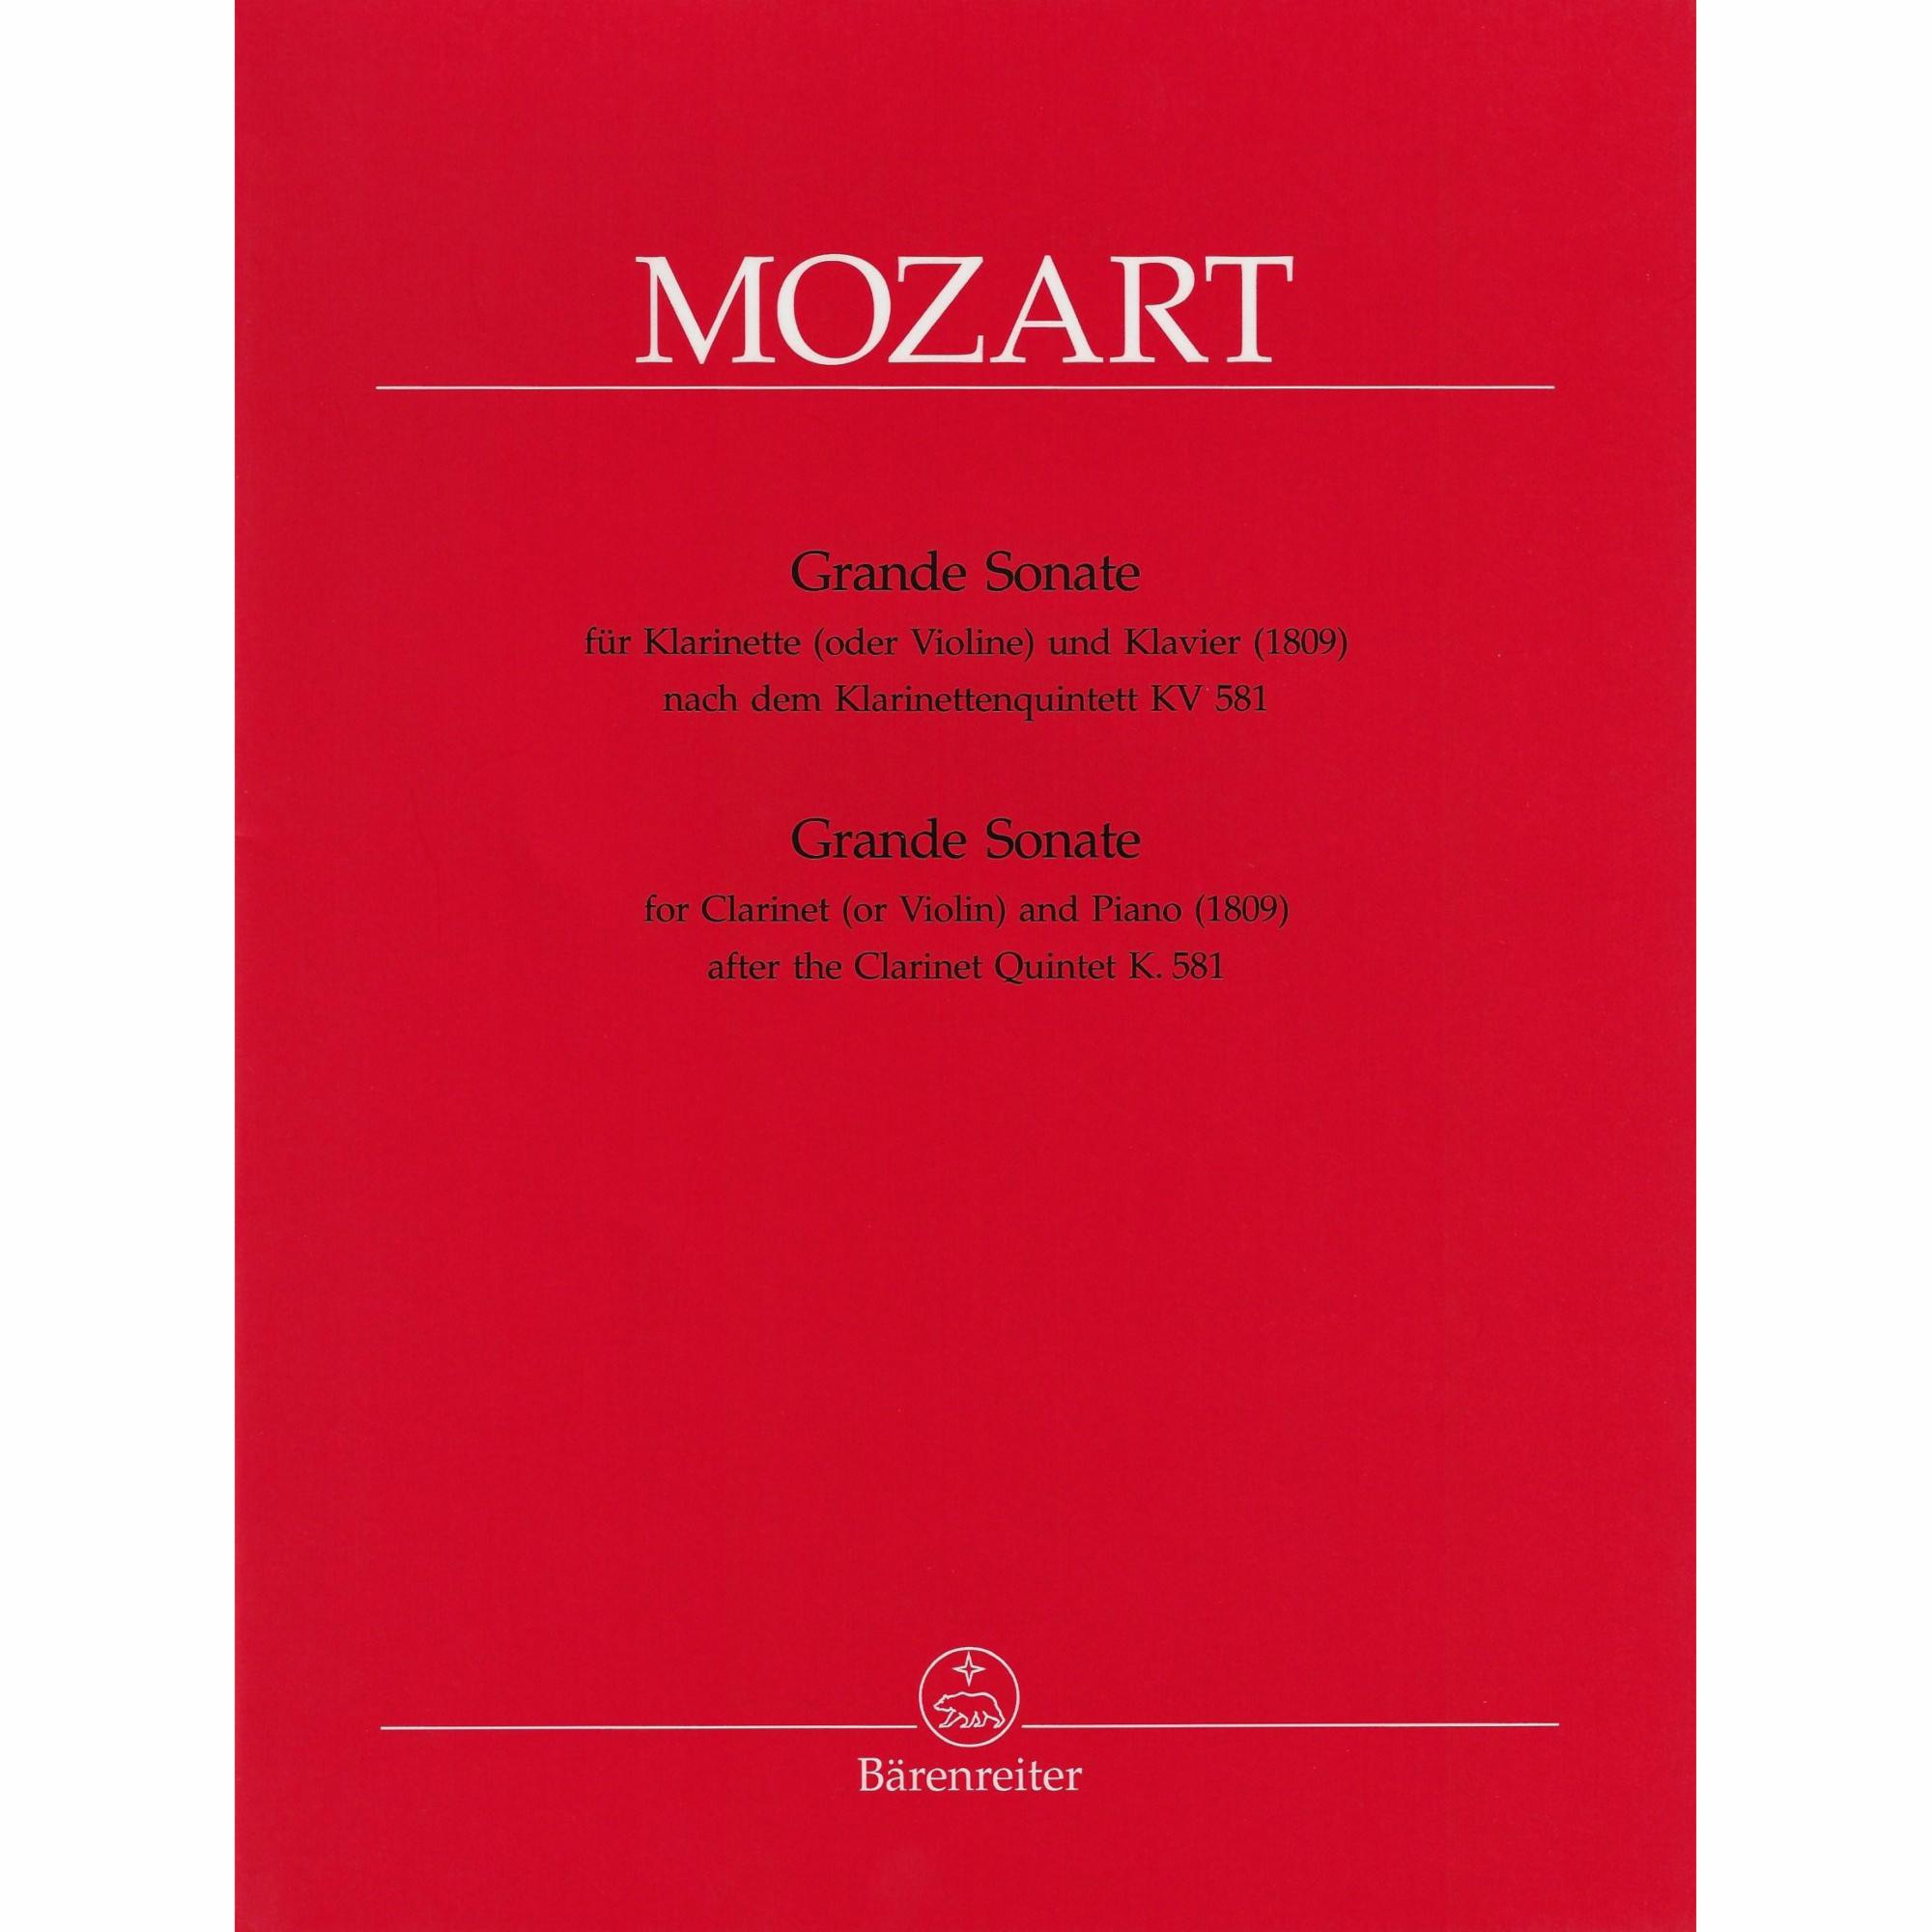 Mozart -- Grande Sonata, after the Clarinet Quintet, K. 581 for Violin and Piano